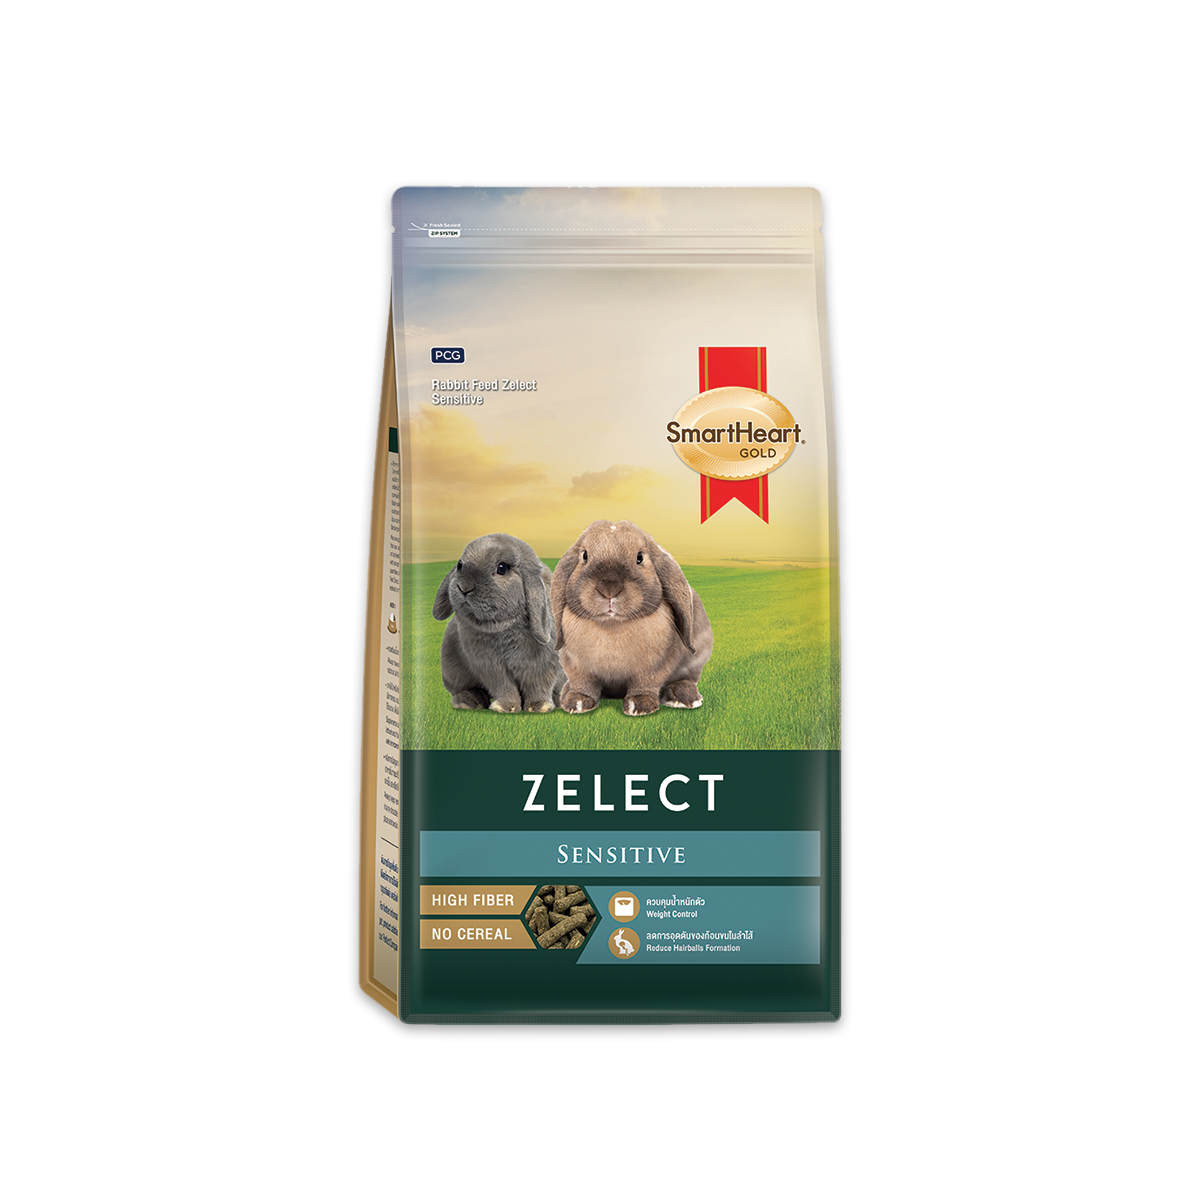 SmartHeart Gold Rabbit Feed Zelect Sensitive สมาร์ทฮาร์ท โกลด์ ซีเลกต์ เซนซิทีฟ อาหารสำหรับกระต่ายโต